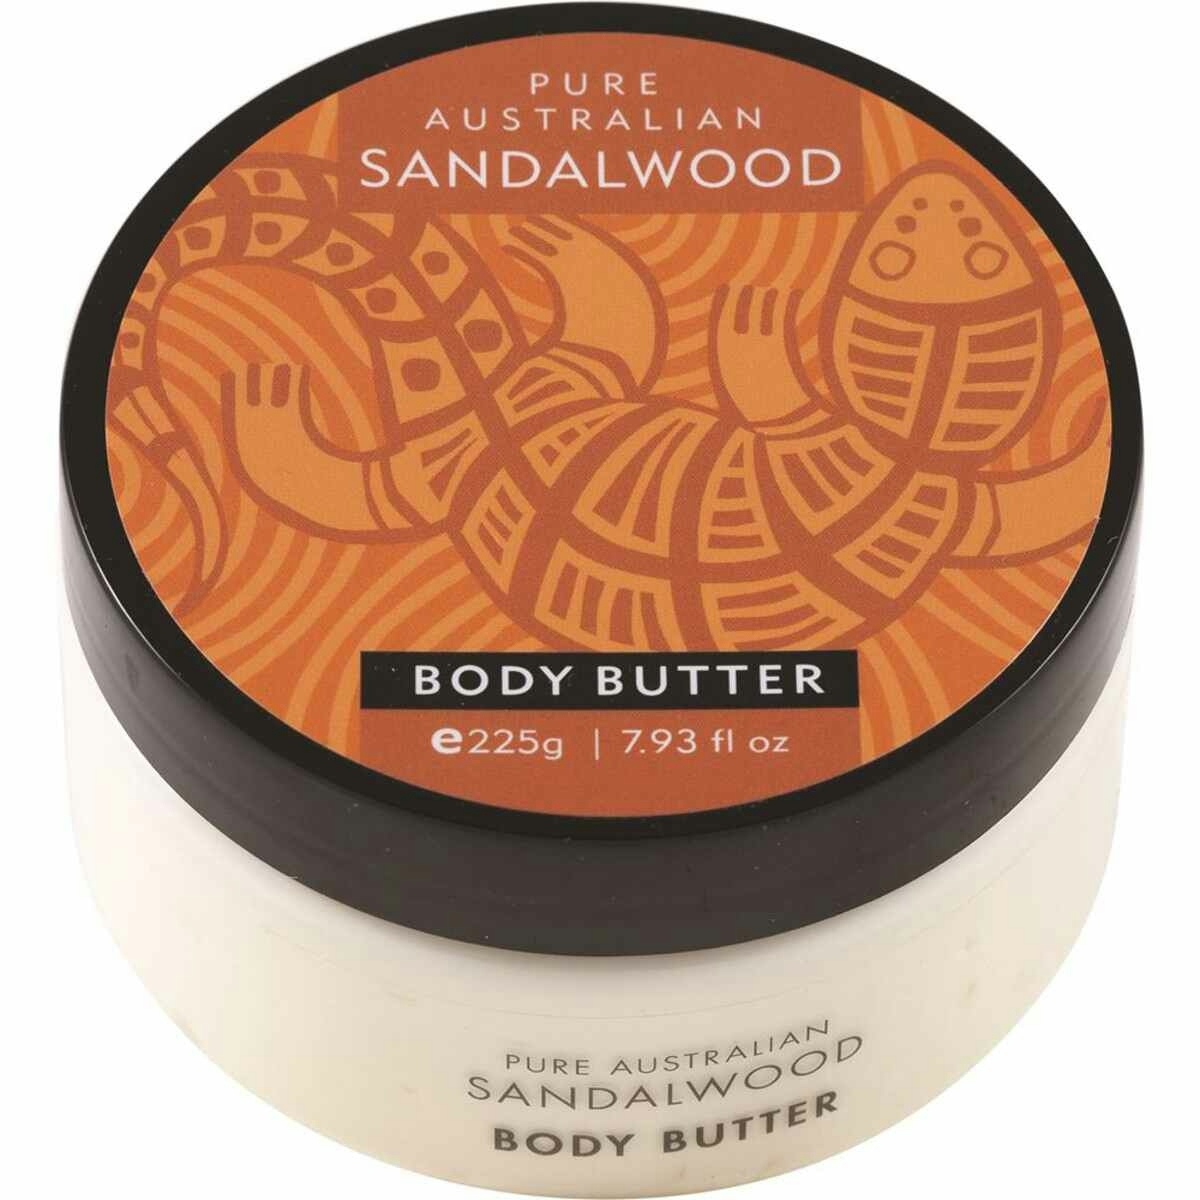 image of Pure Australian Sandalwood Body Butter 225g on white background